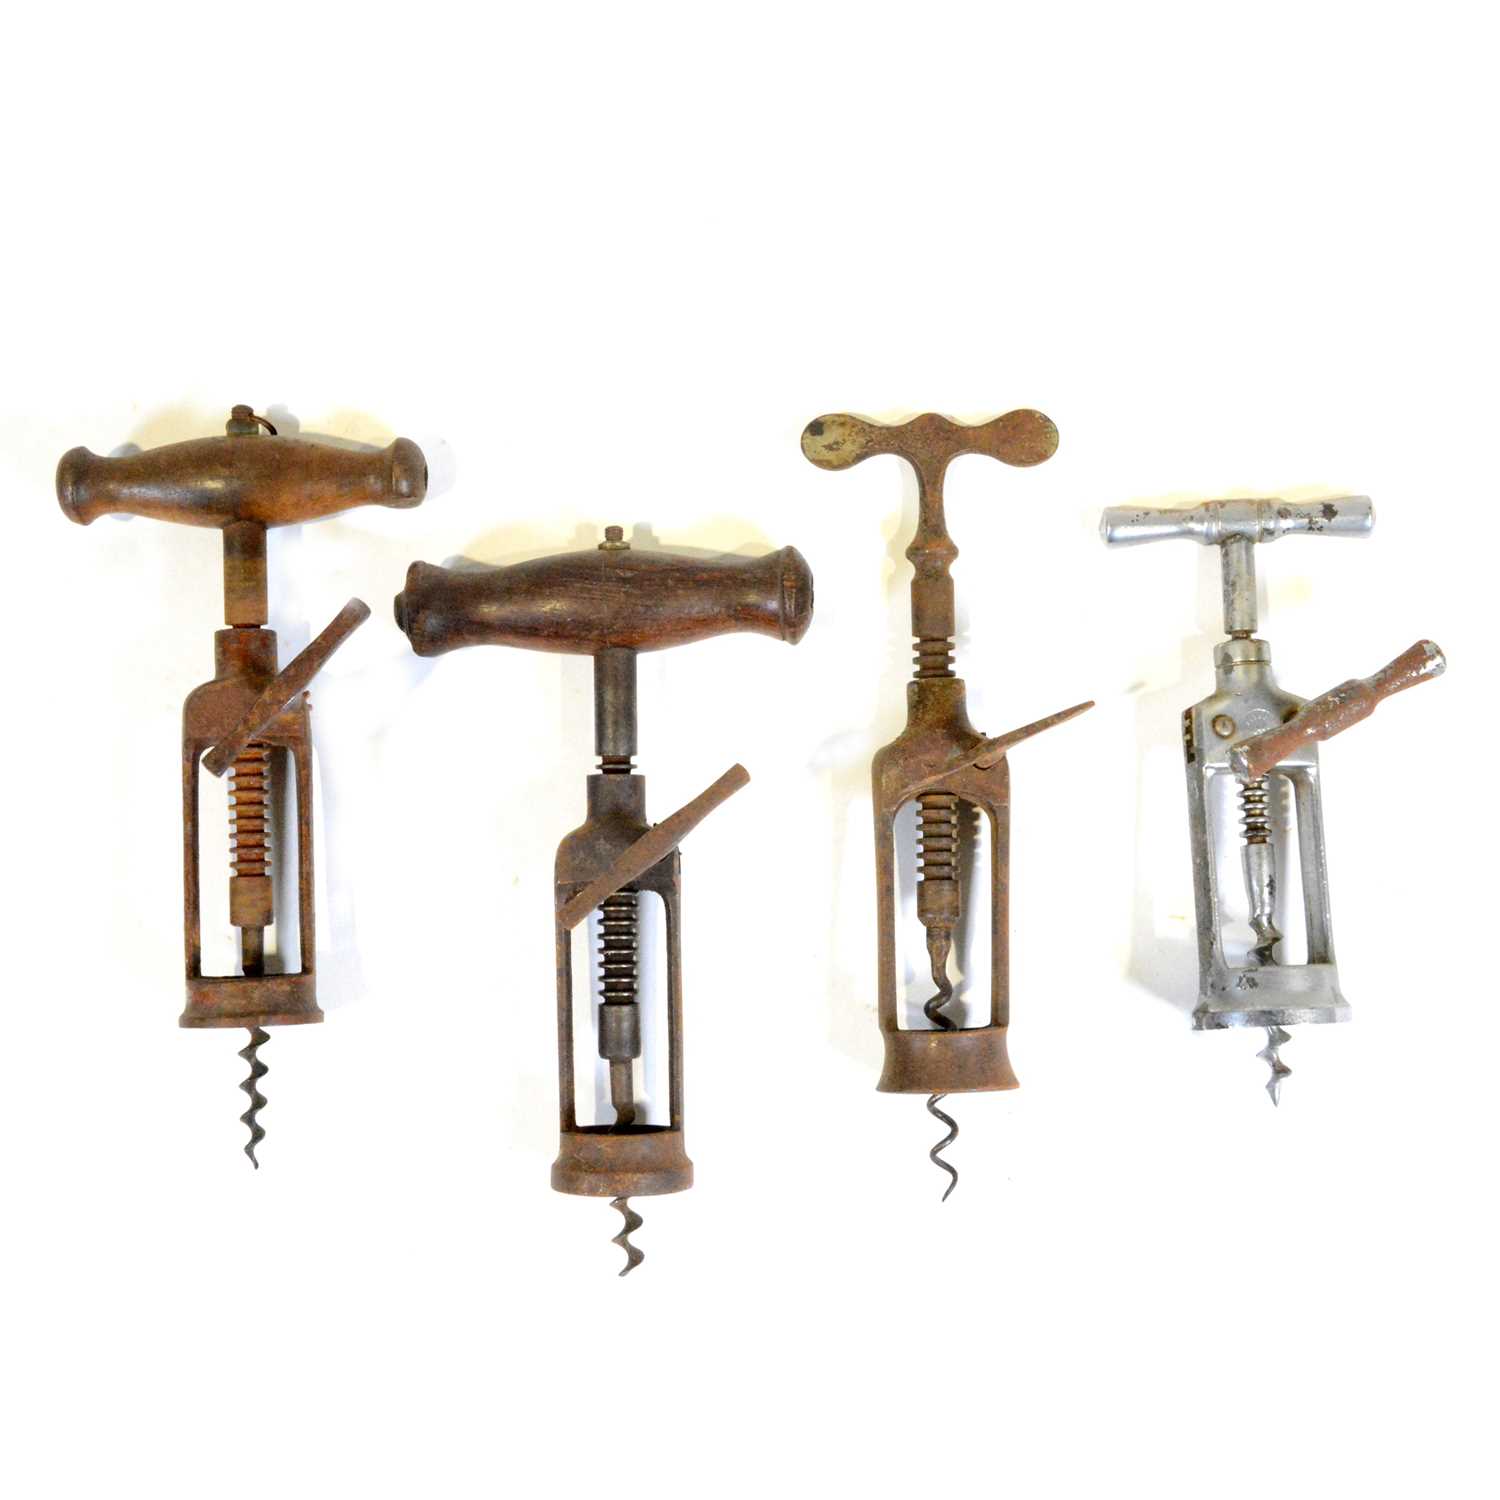 Lot 52 - Four rack and pinion corkscrews